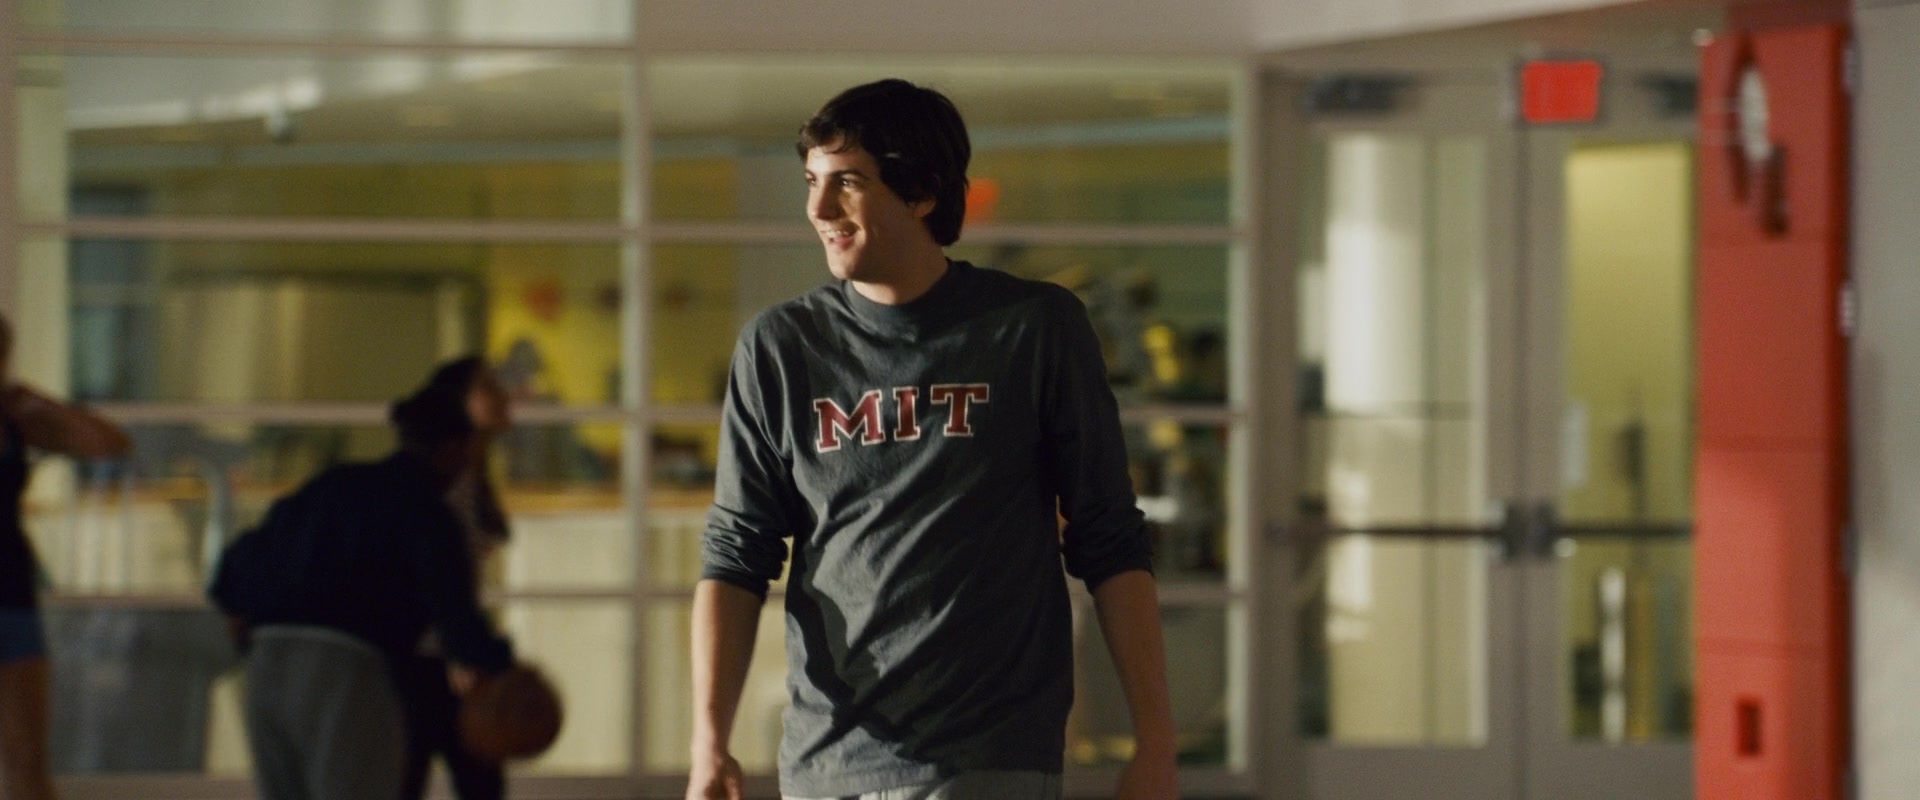 MIT T-Shirt Worn by Jim Sturgess in 21 (2008) Movie1920 x 800